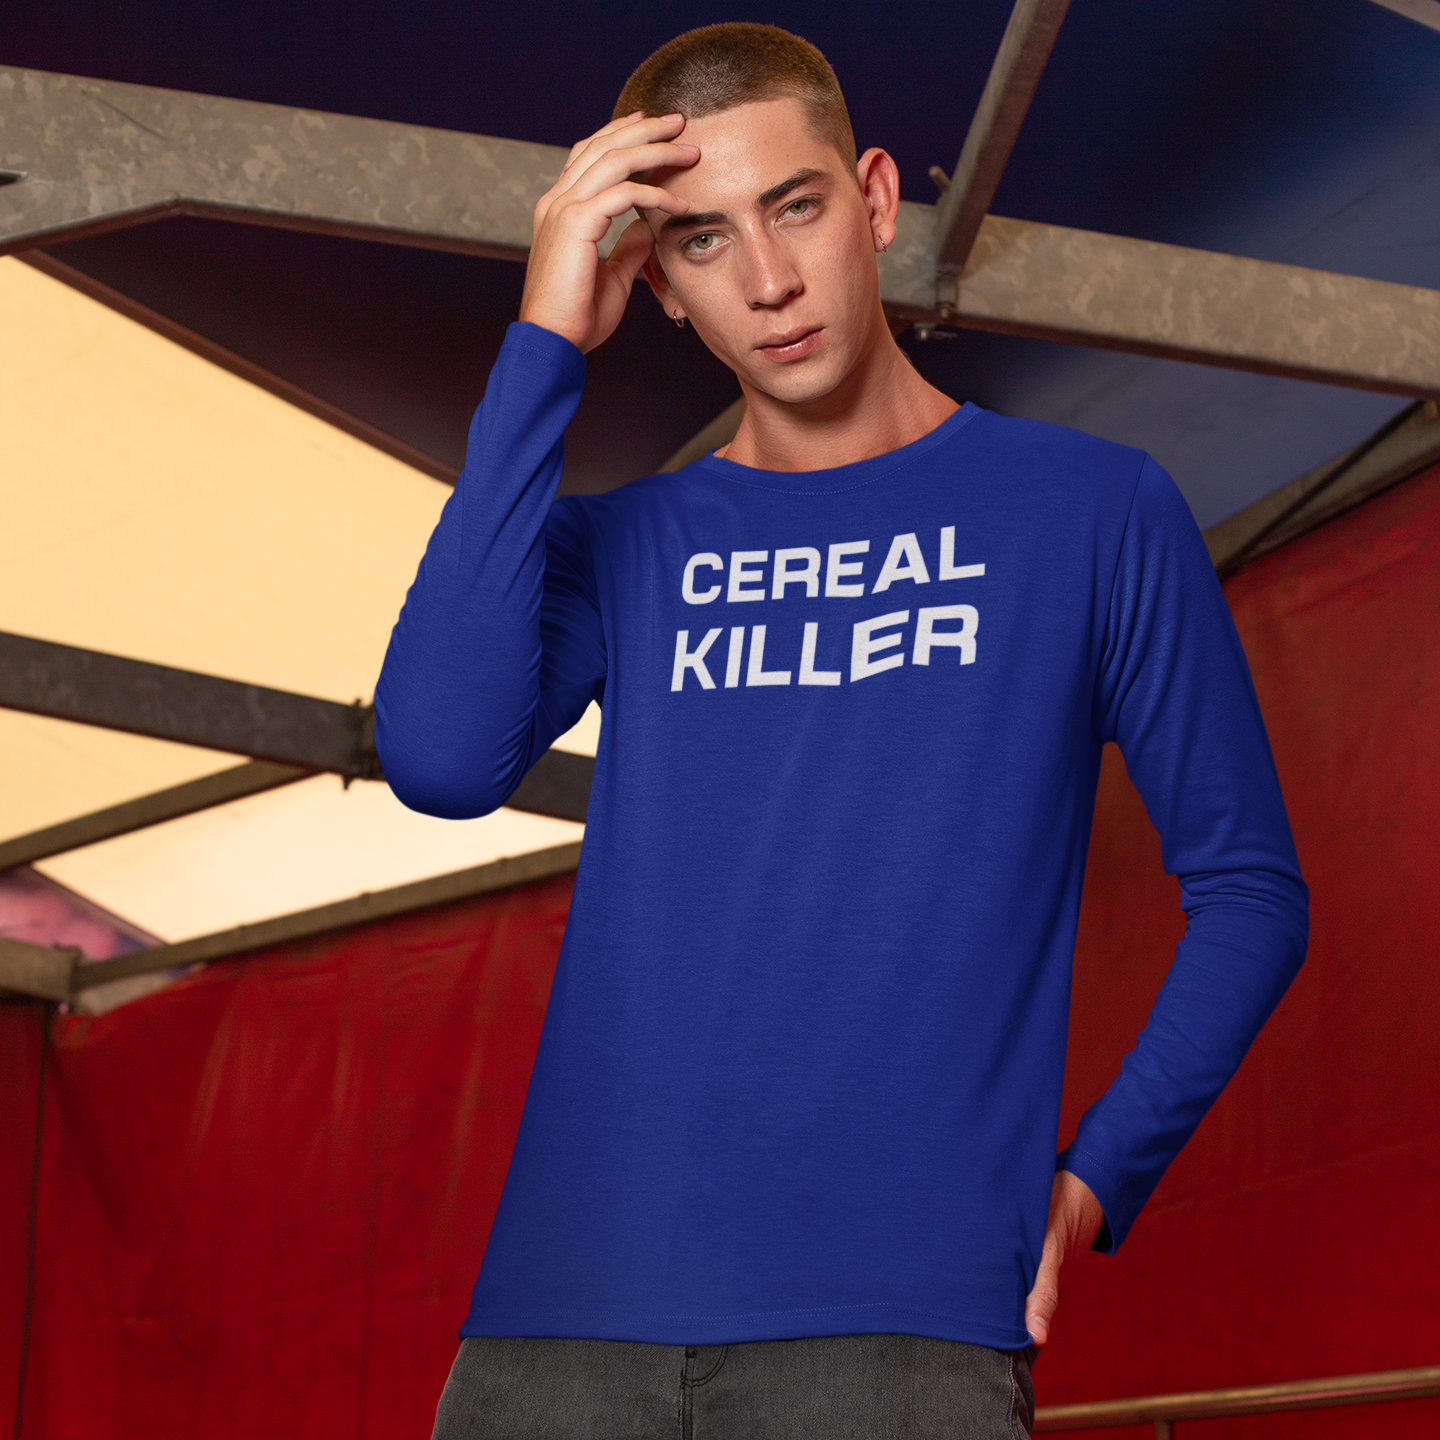 'Cereal killer' adult longsleeve shirt